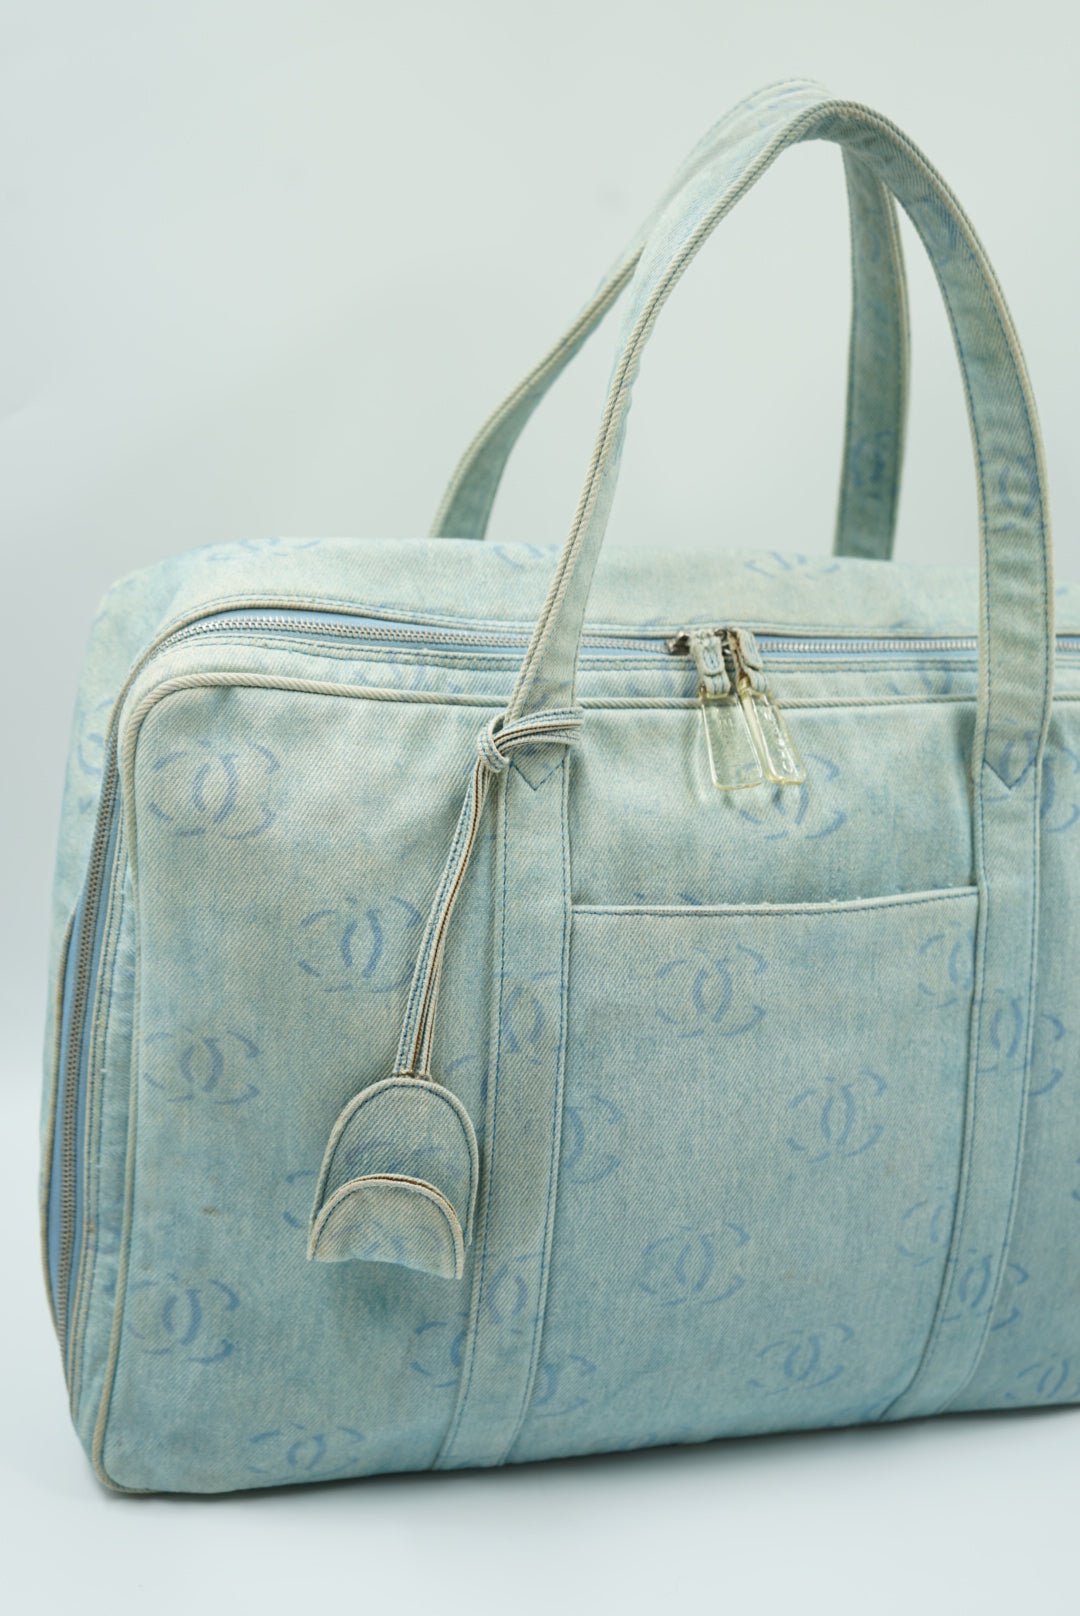 Chanel denim suitcase/ weekend bag